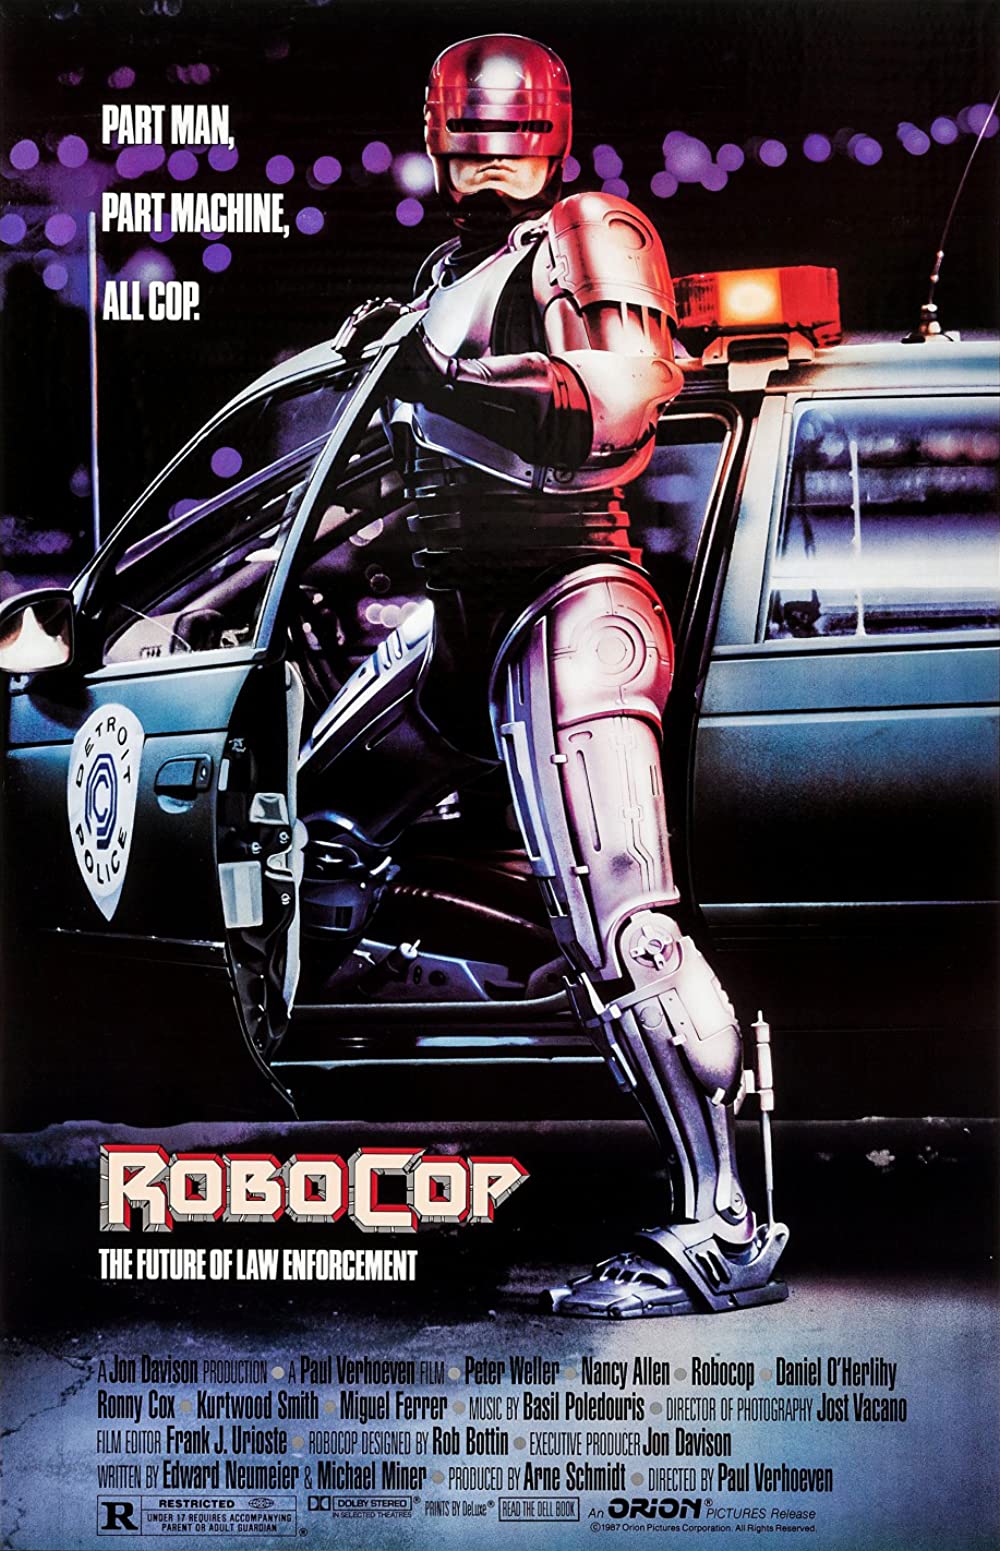 Filmbeschreibung zu RoboCop (1987)